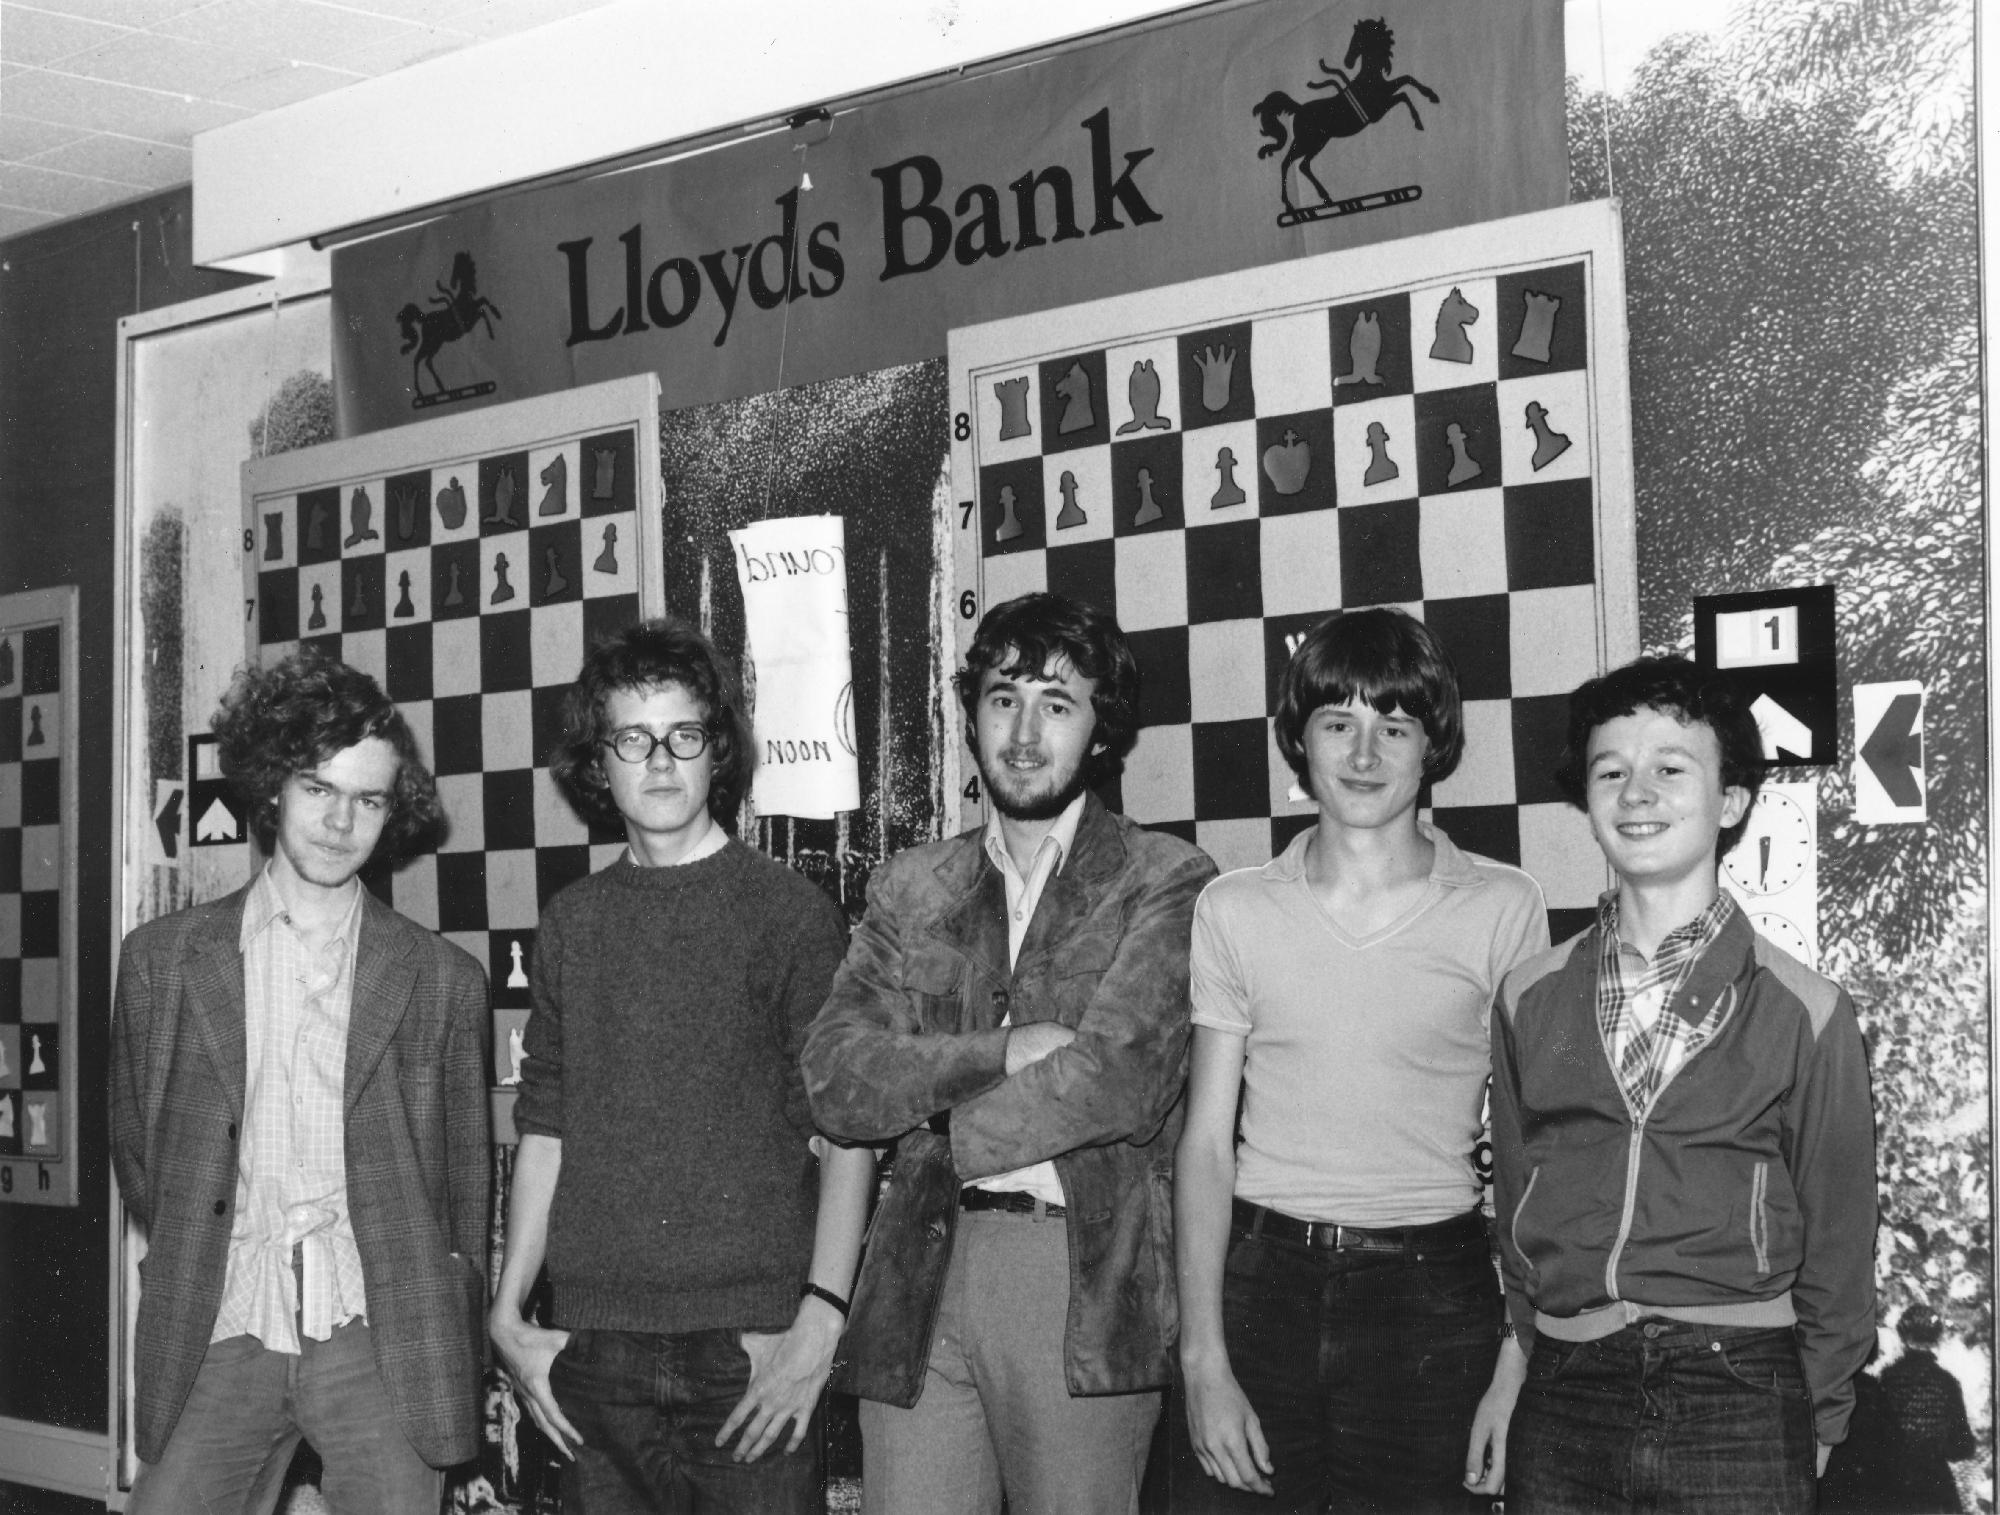 Nigel Davies (centre) at a Lloyds Bank event